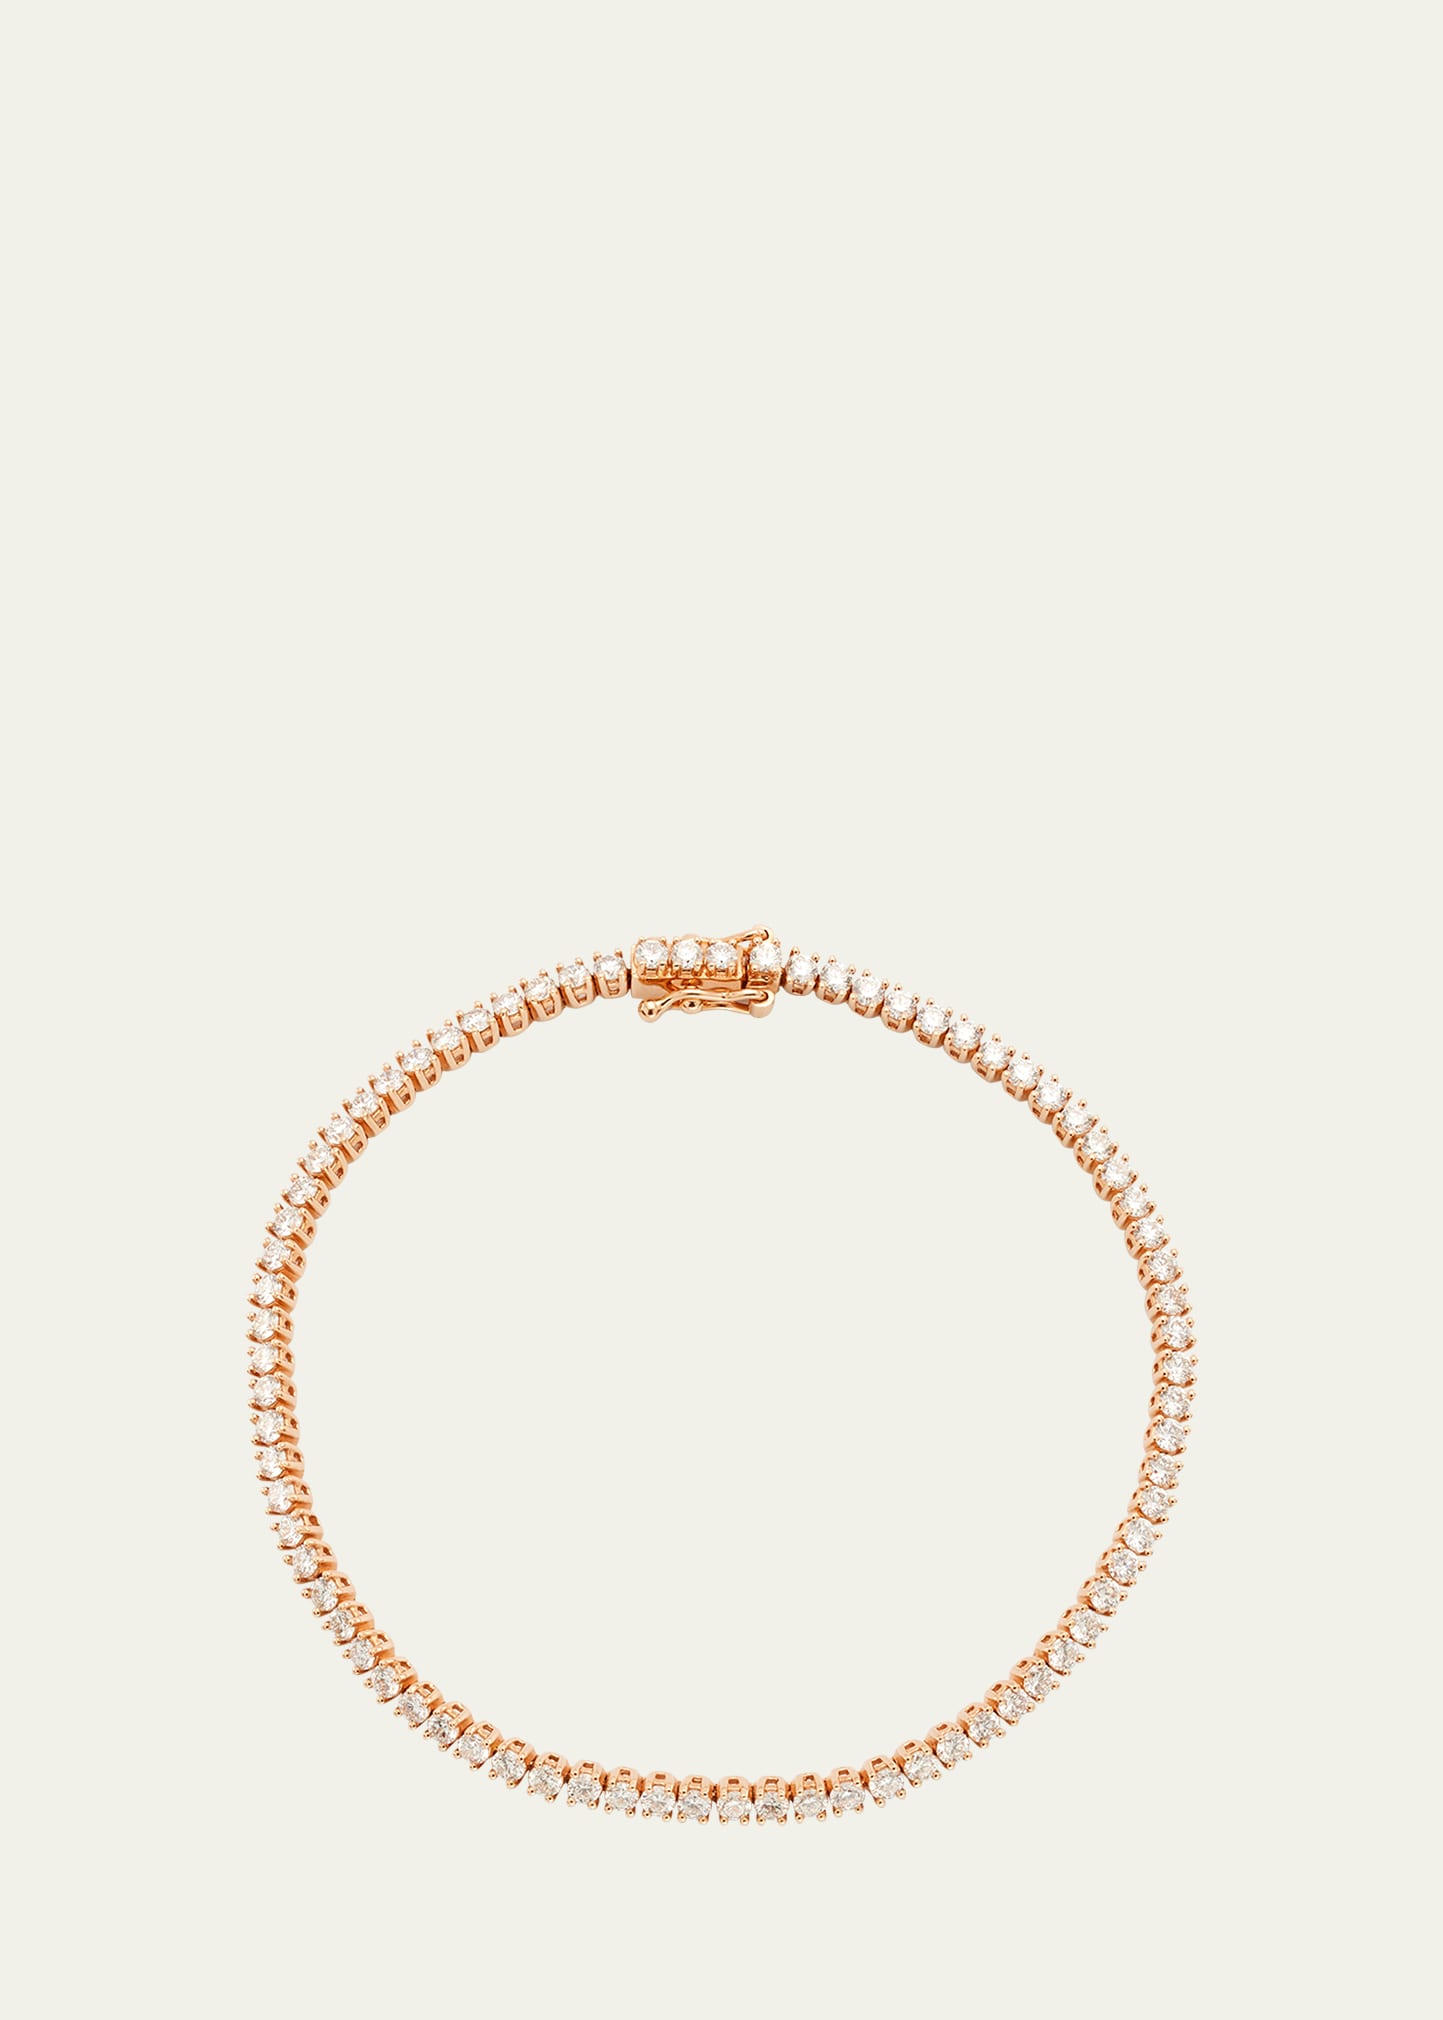 Hepburn 18k Rose Gold Bracelet with Diamonds